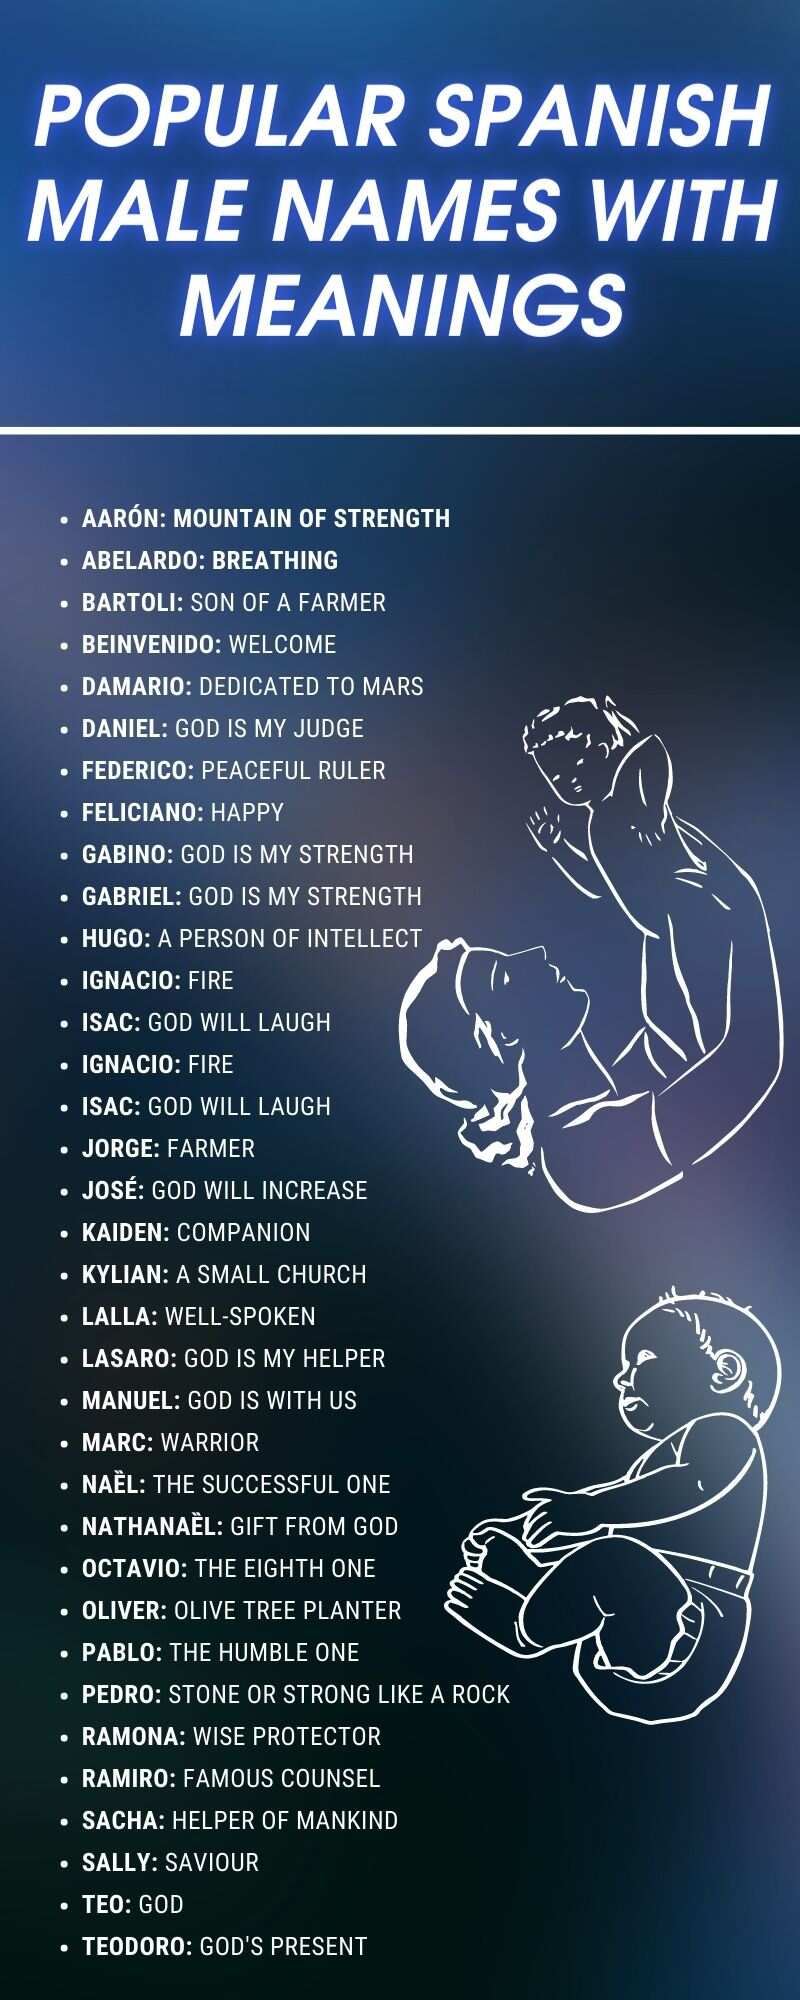 Popular Spanish male names